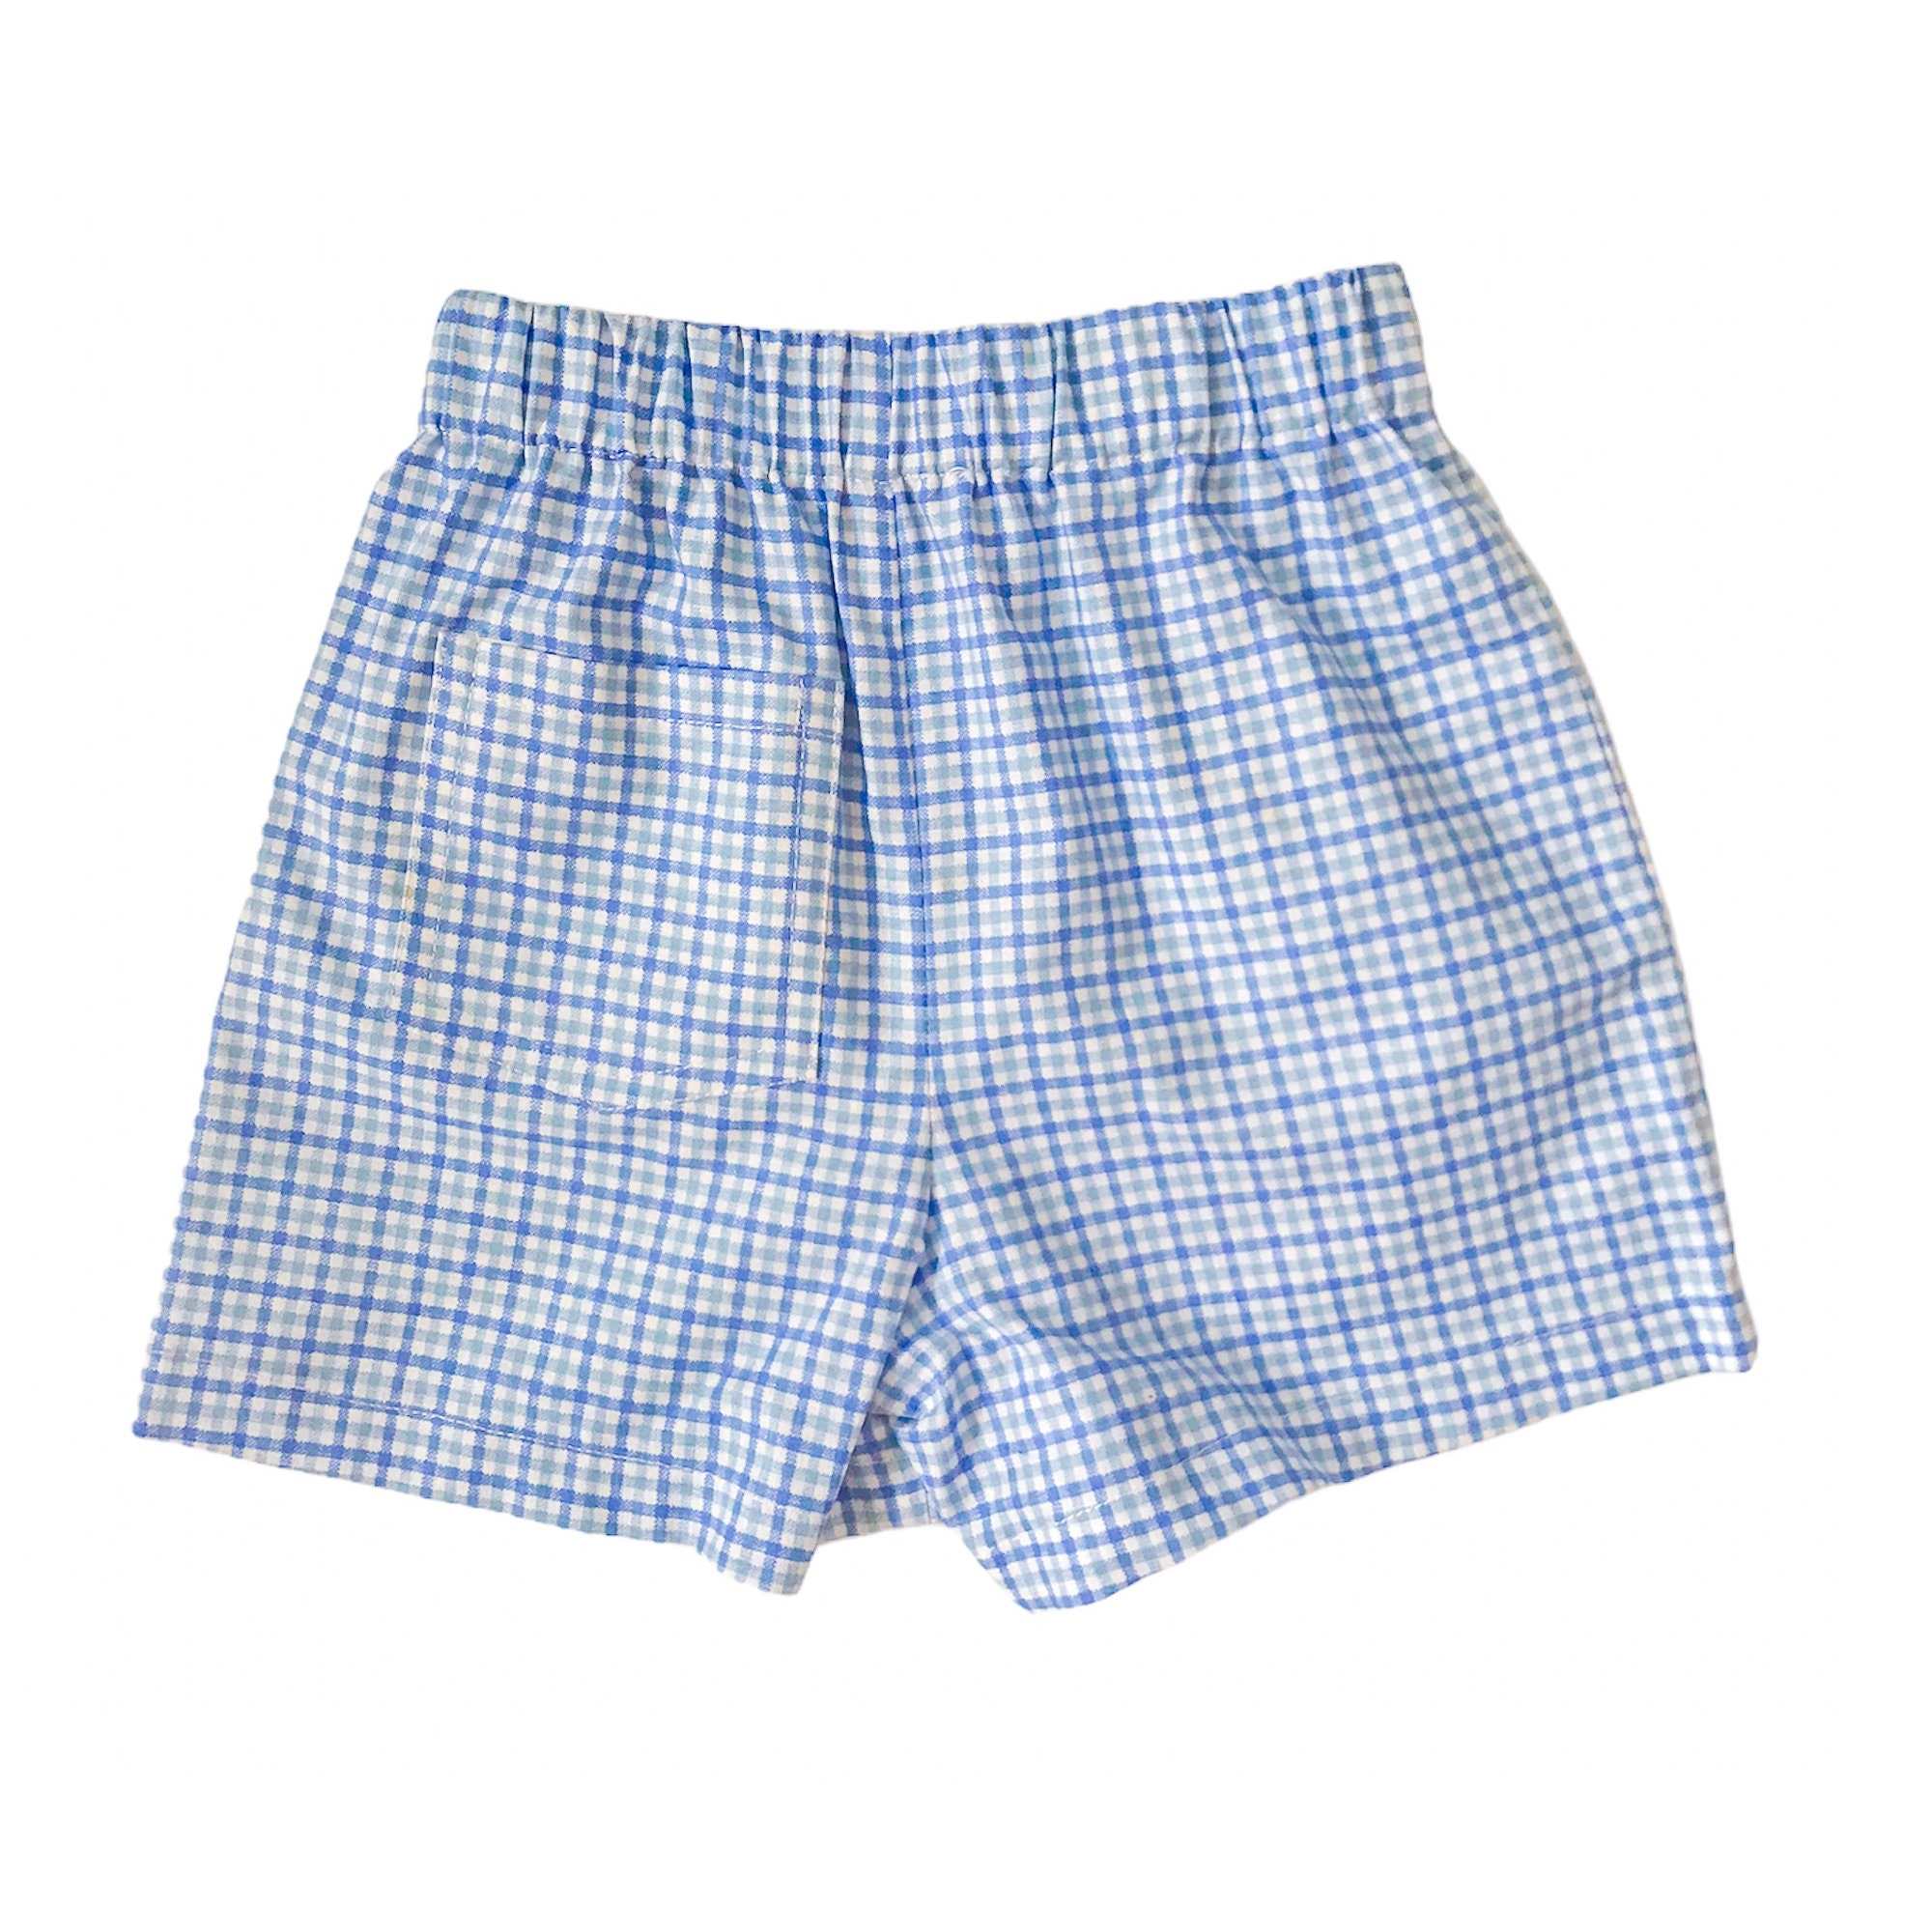 Boys Shorts Check Boys Shorts Cotton Shorts Toddler Shorts - Etsy